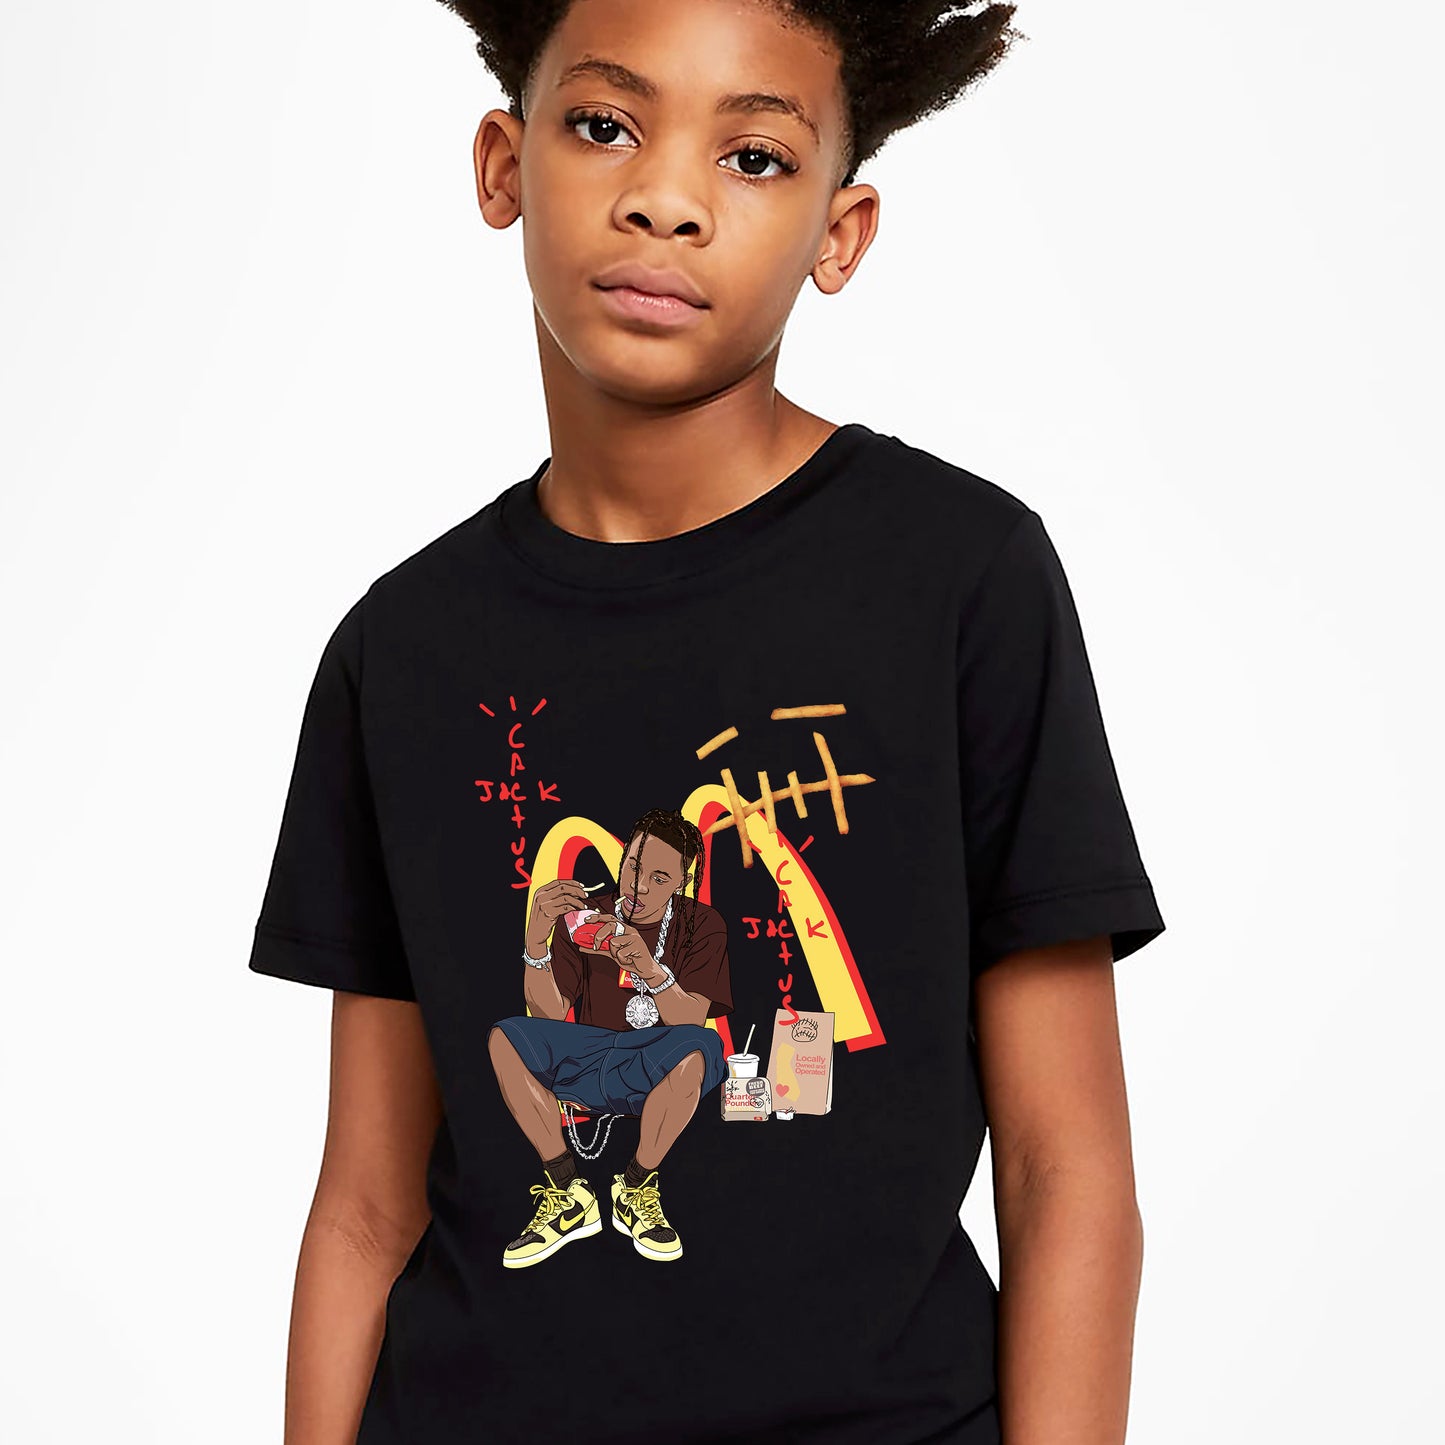 Travis Scott Kid's T-Shirt - New Franchise